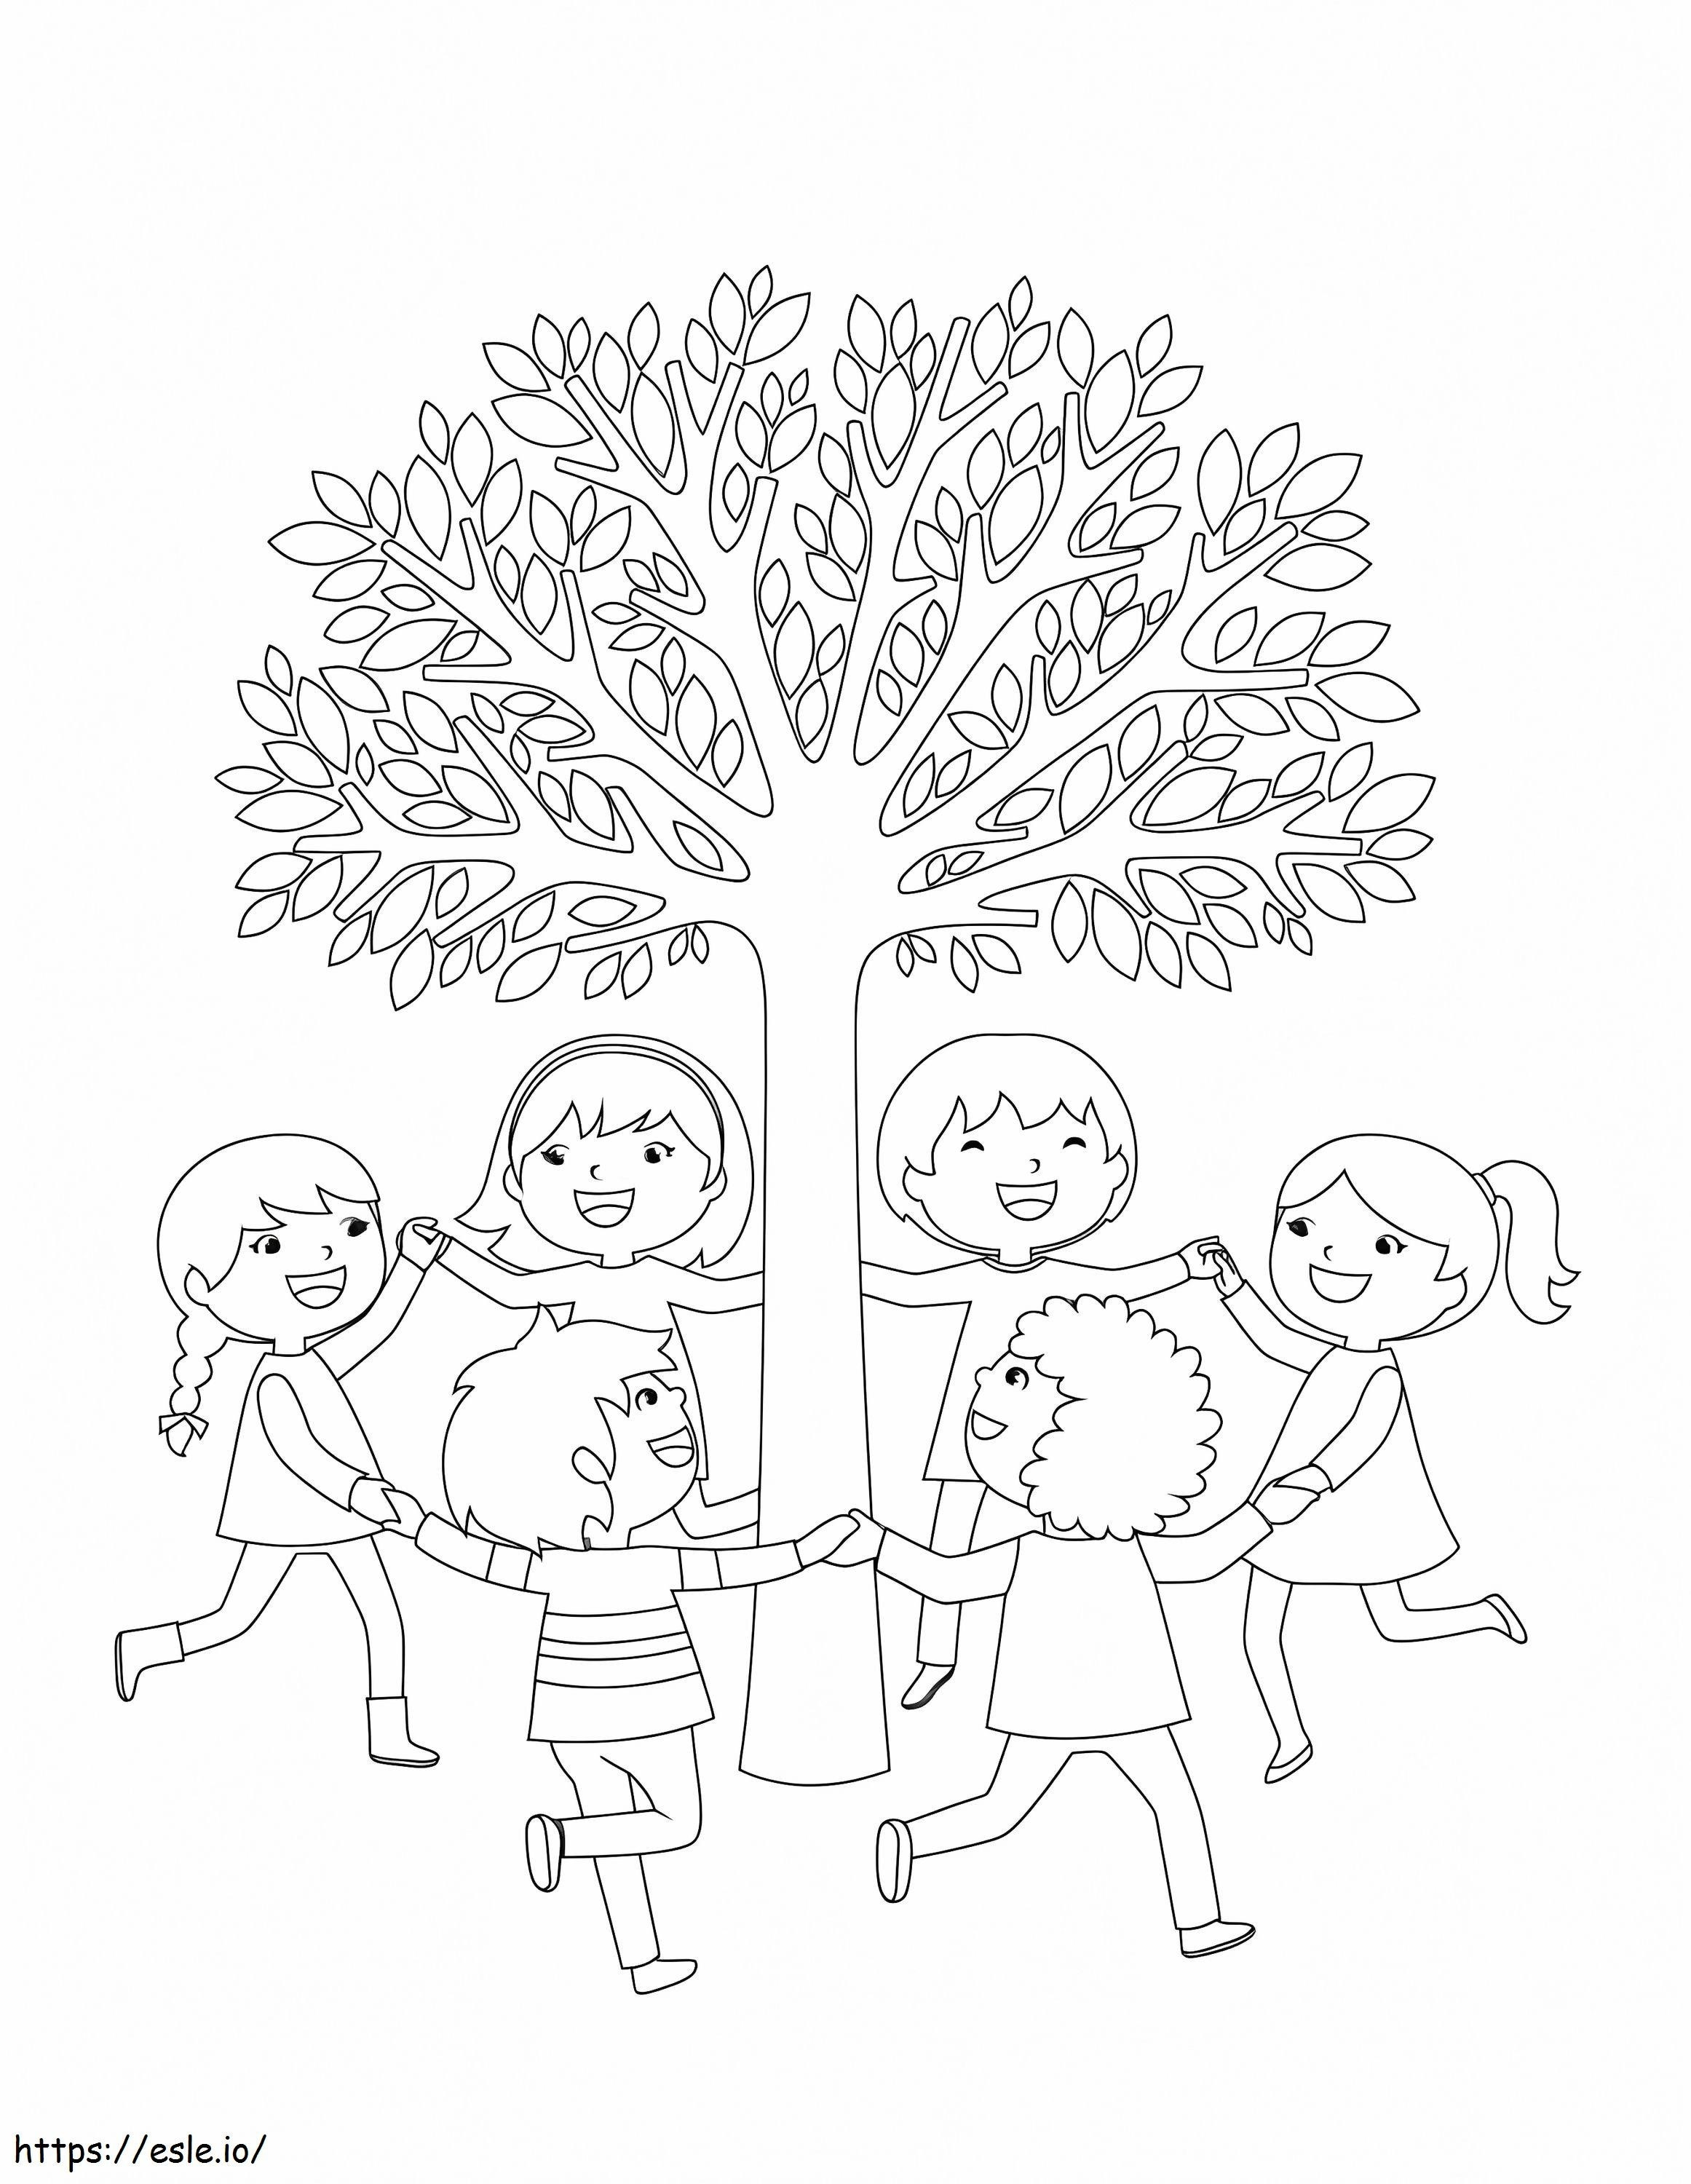 Seis amigos brincando com a árvore para colorir